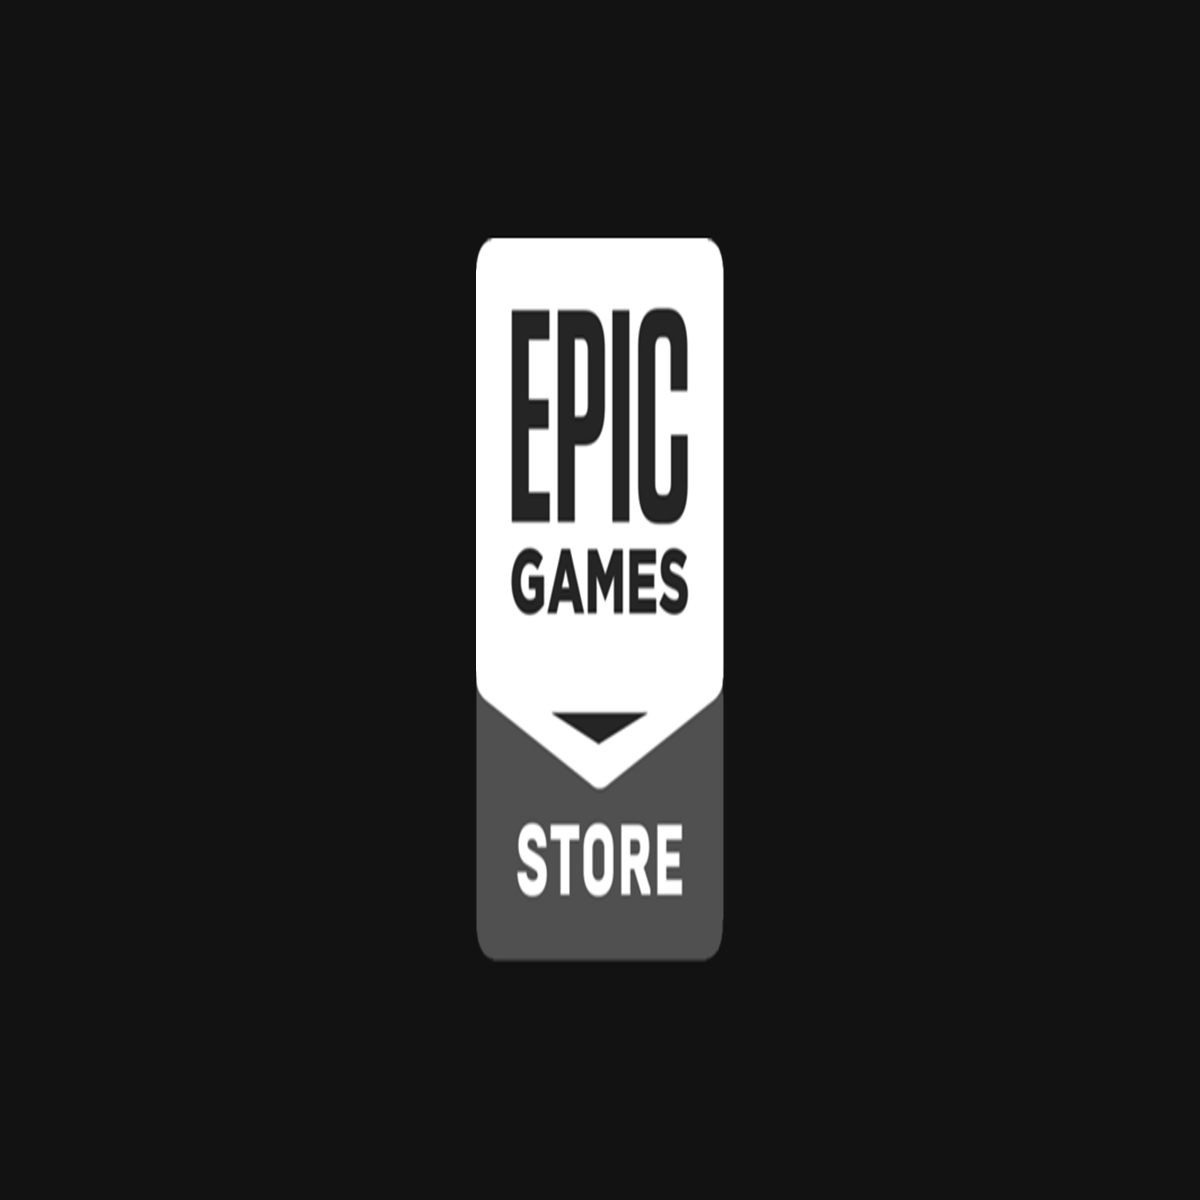 A epic games vai presentear 15 jogos no natal totalmente gratis, e eu